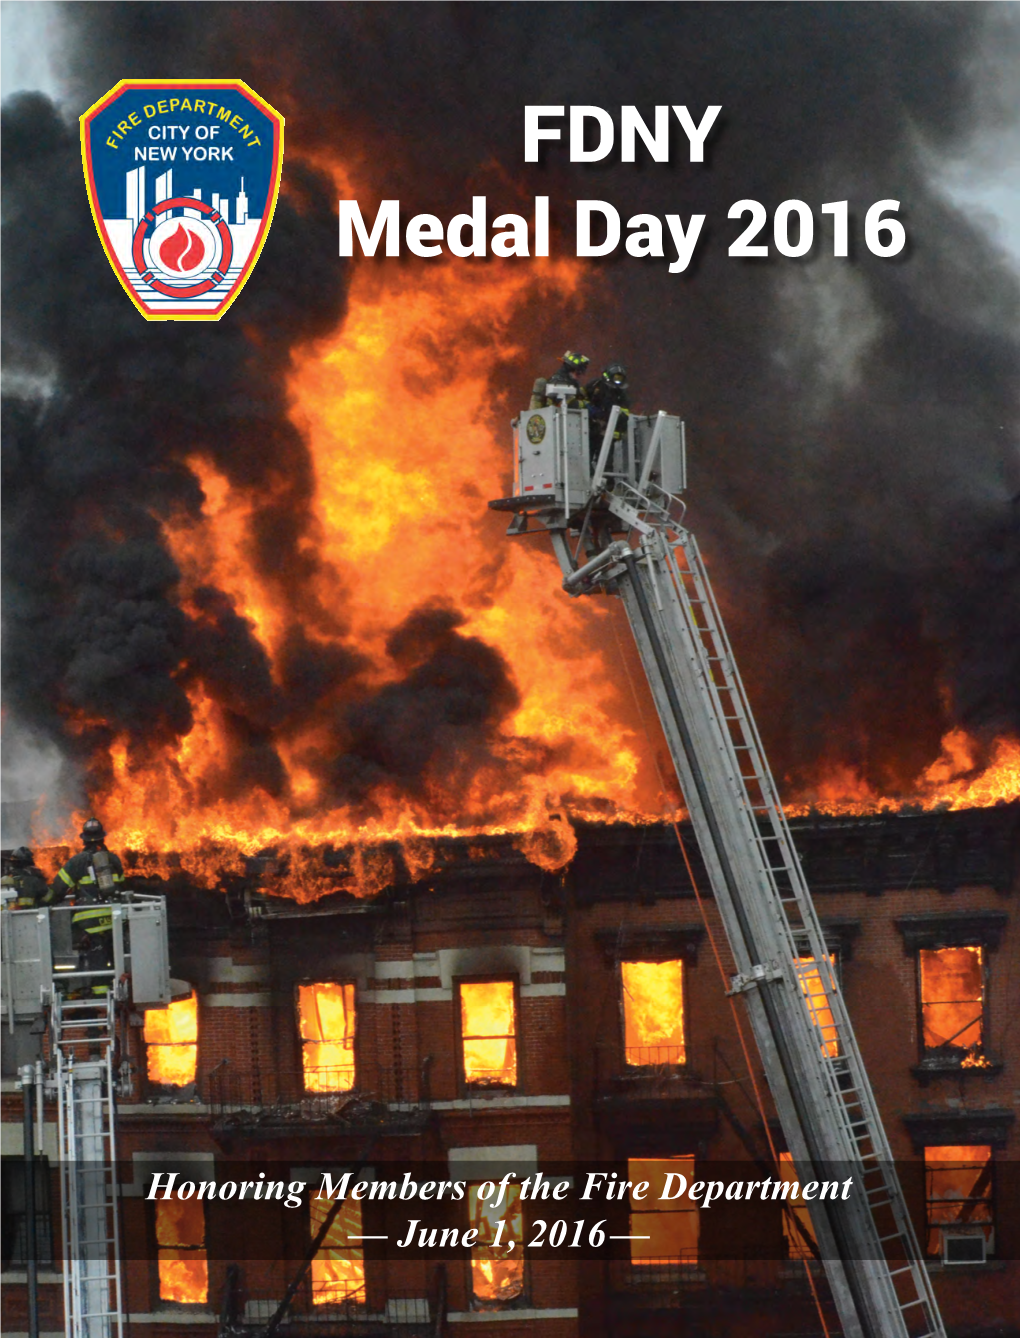 FDNY Medal Day 2016